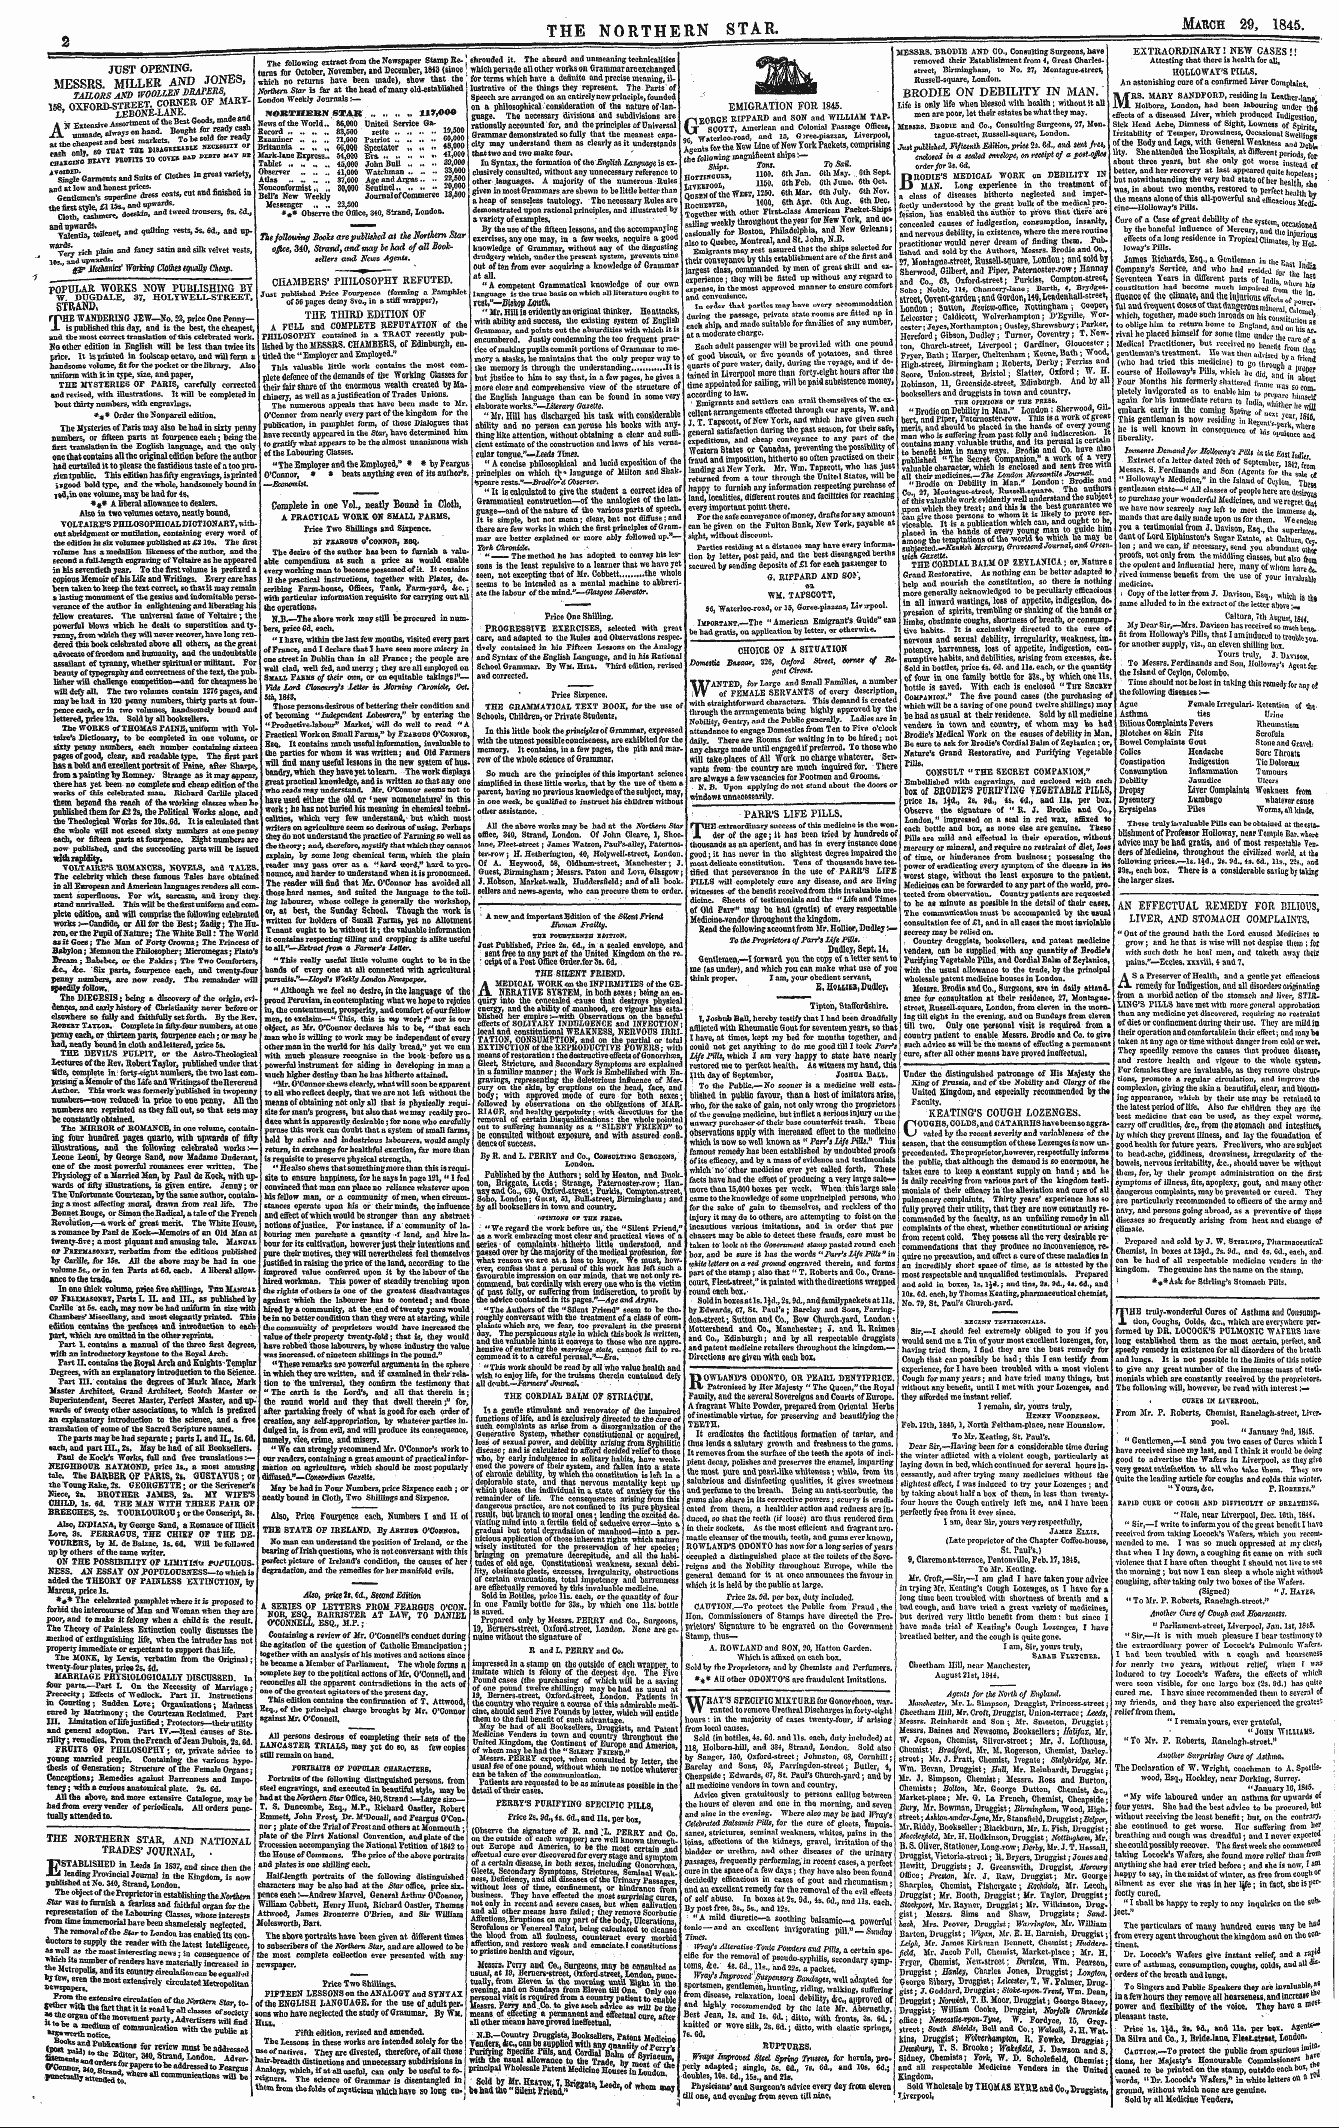 Northern Star (1837-1852): jS F Y, 3rd edition - Ad00119